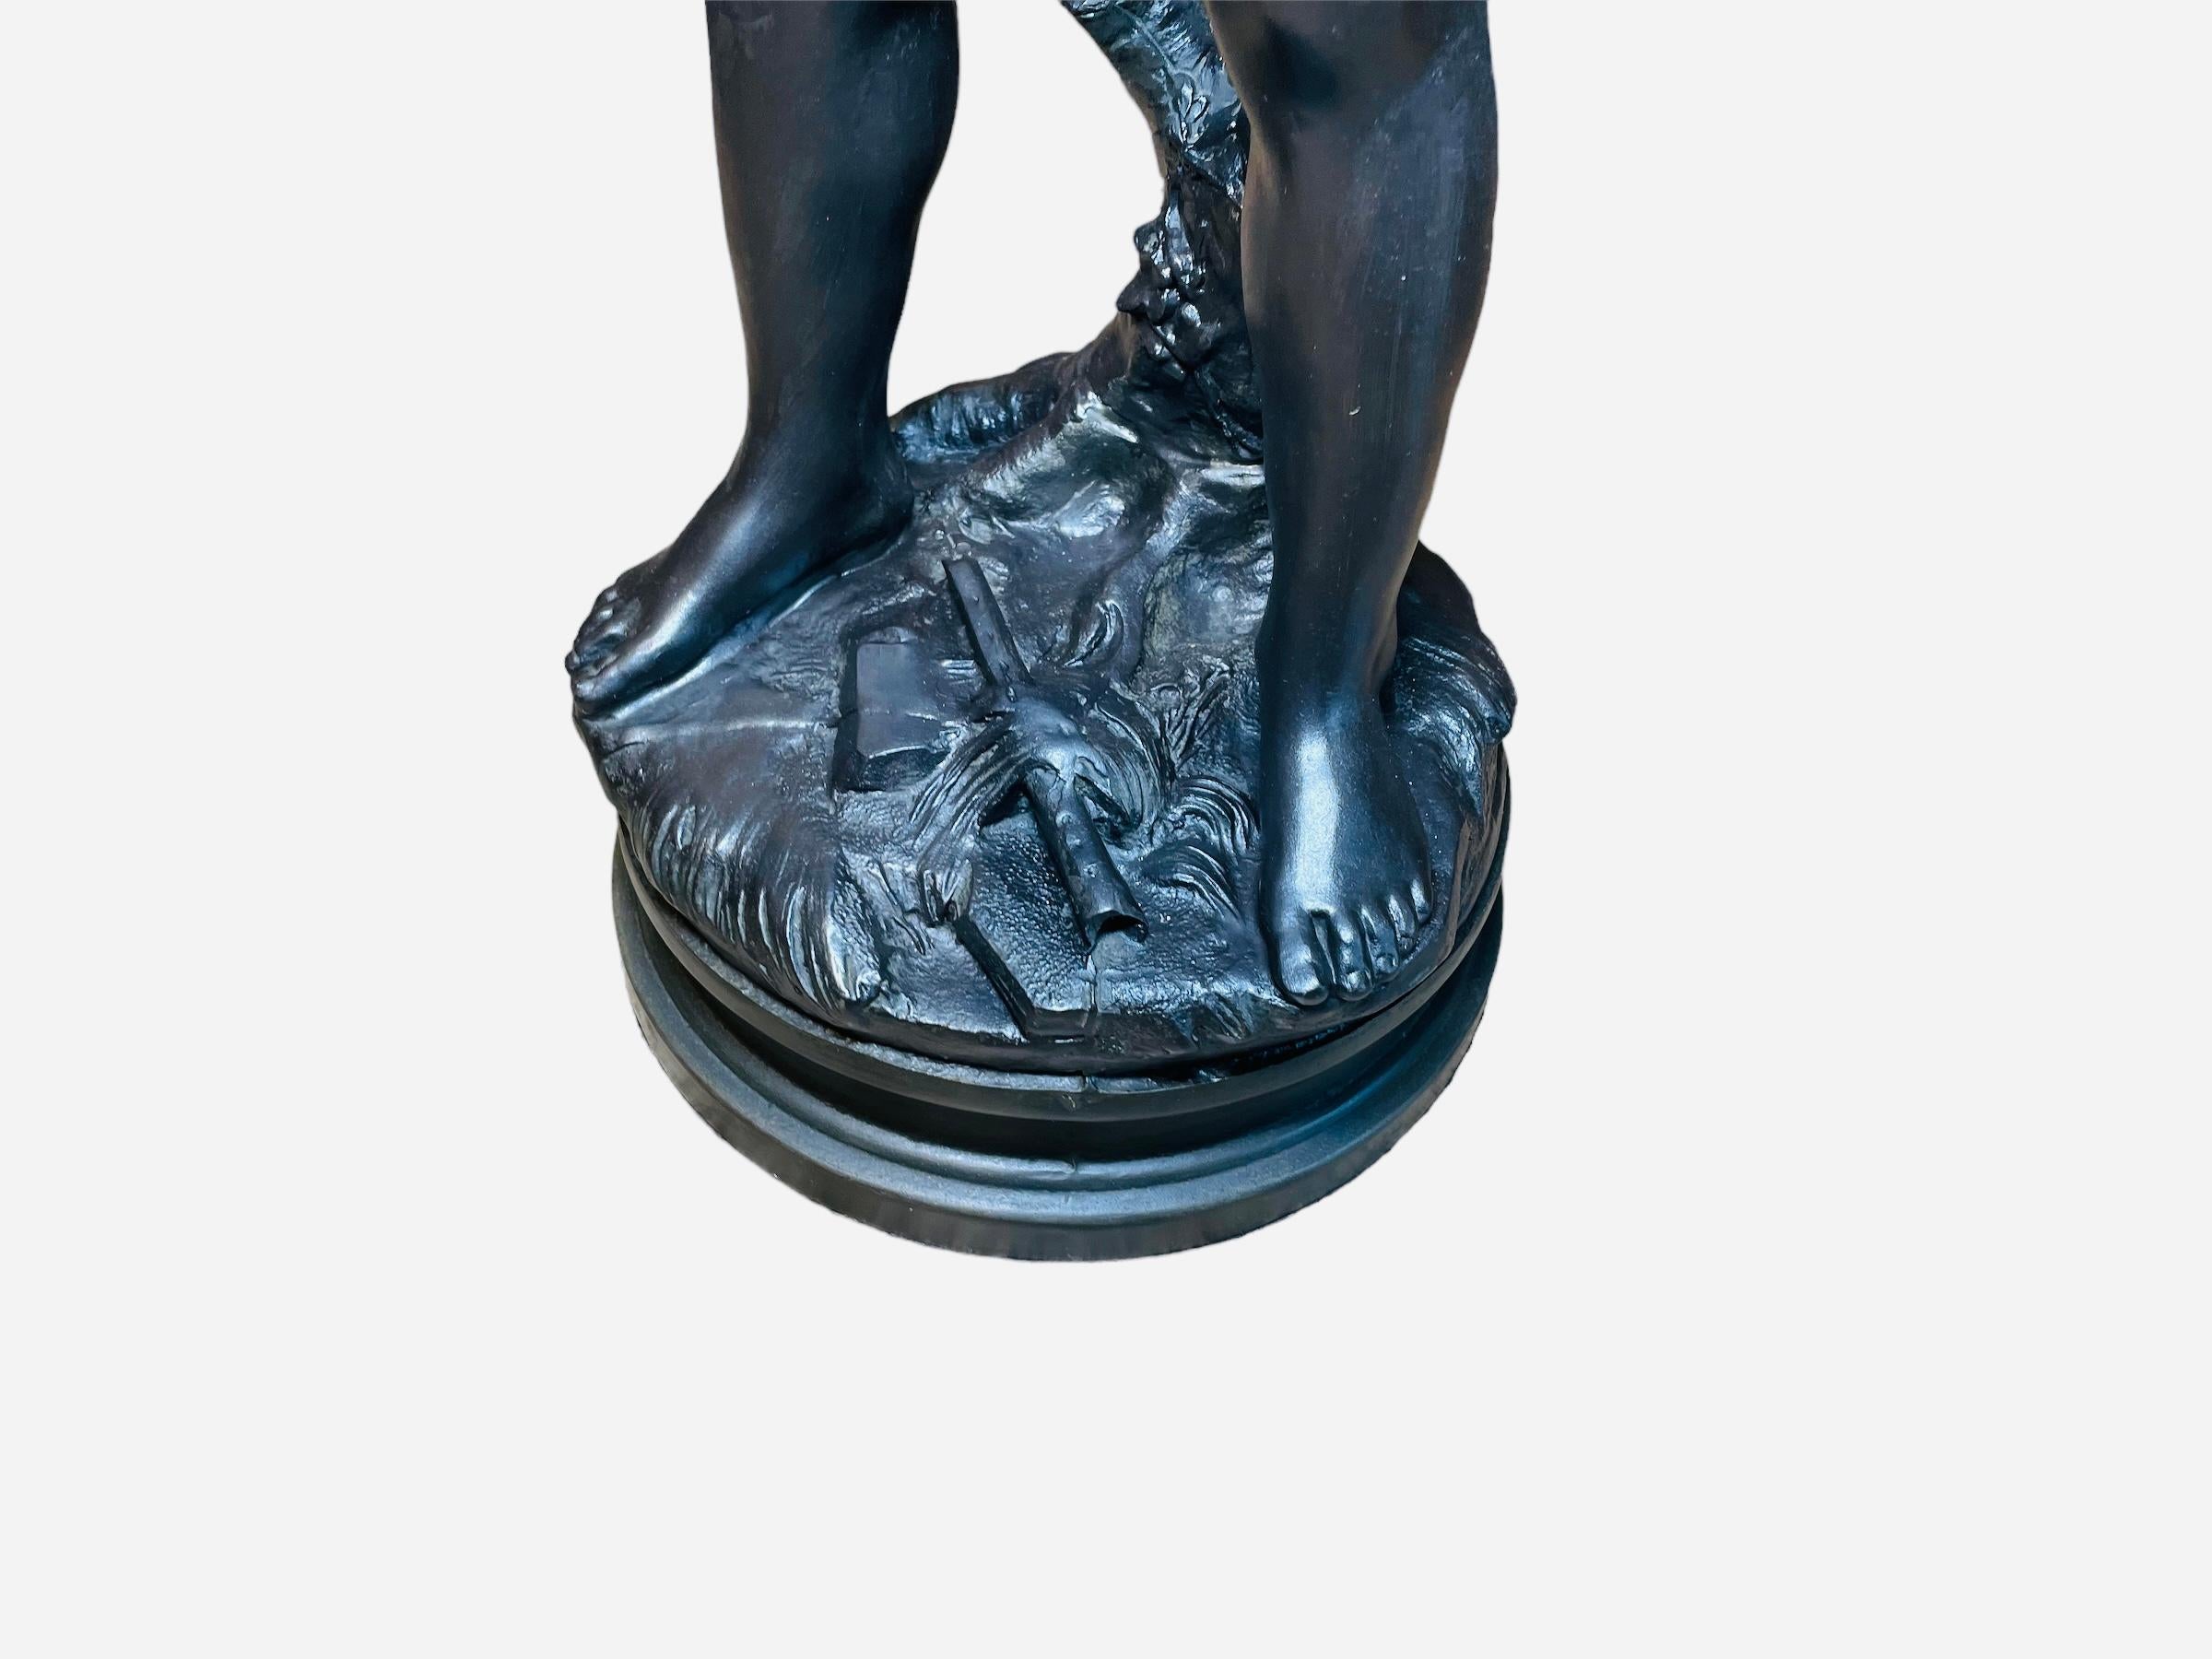 Molded Auguste Moreau “Charmeur” Patinated Metal Sculpture Lamp